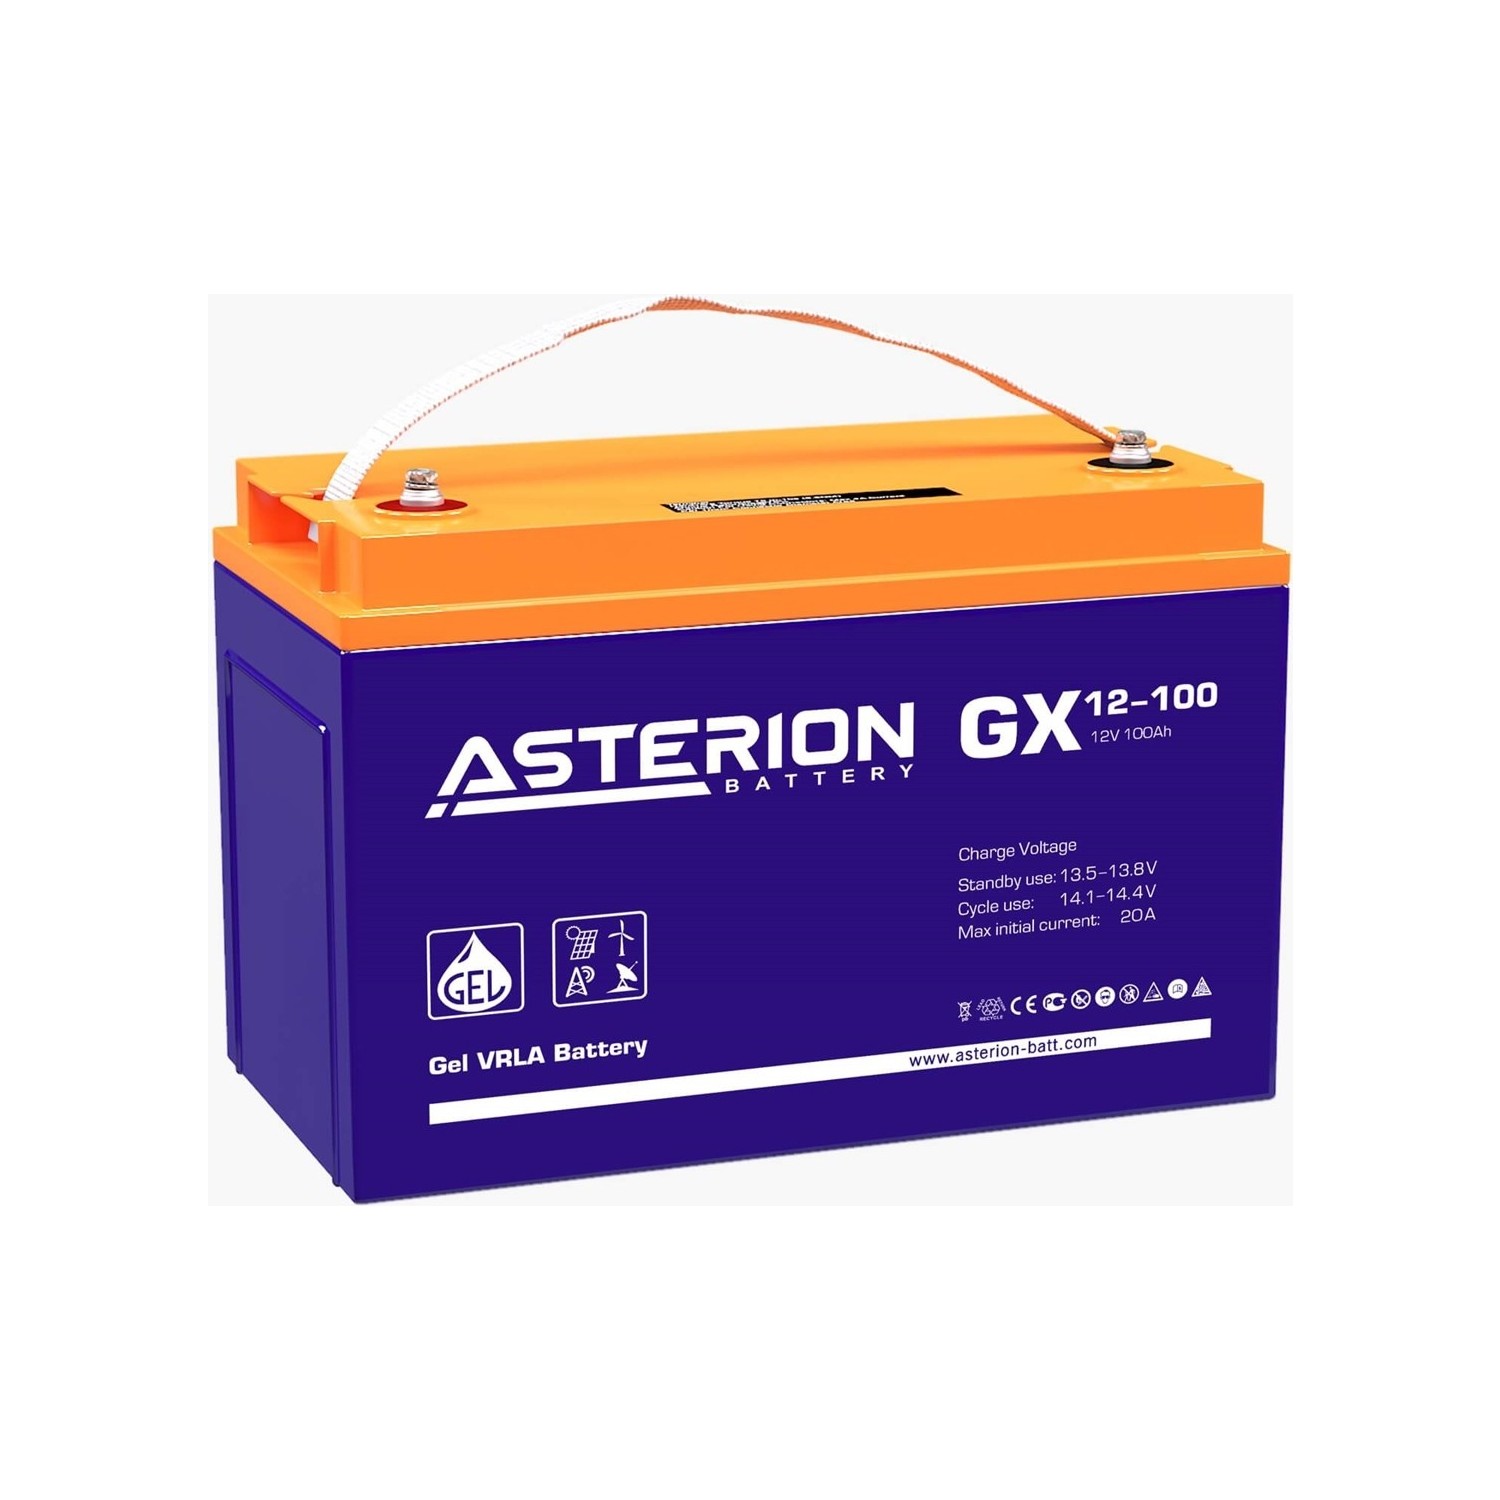 Asterion Gx 12-100 Jel Akü